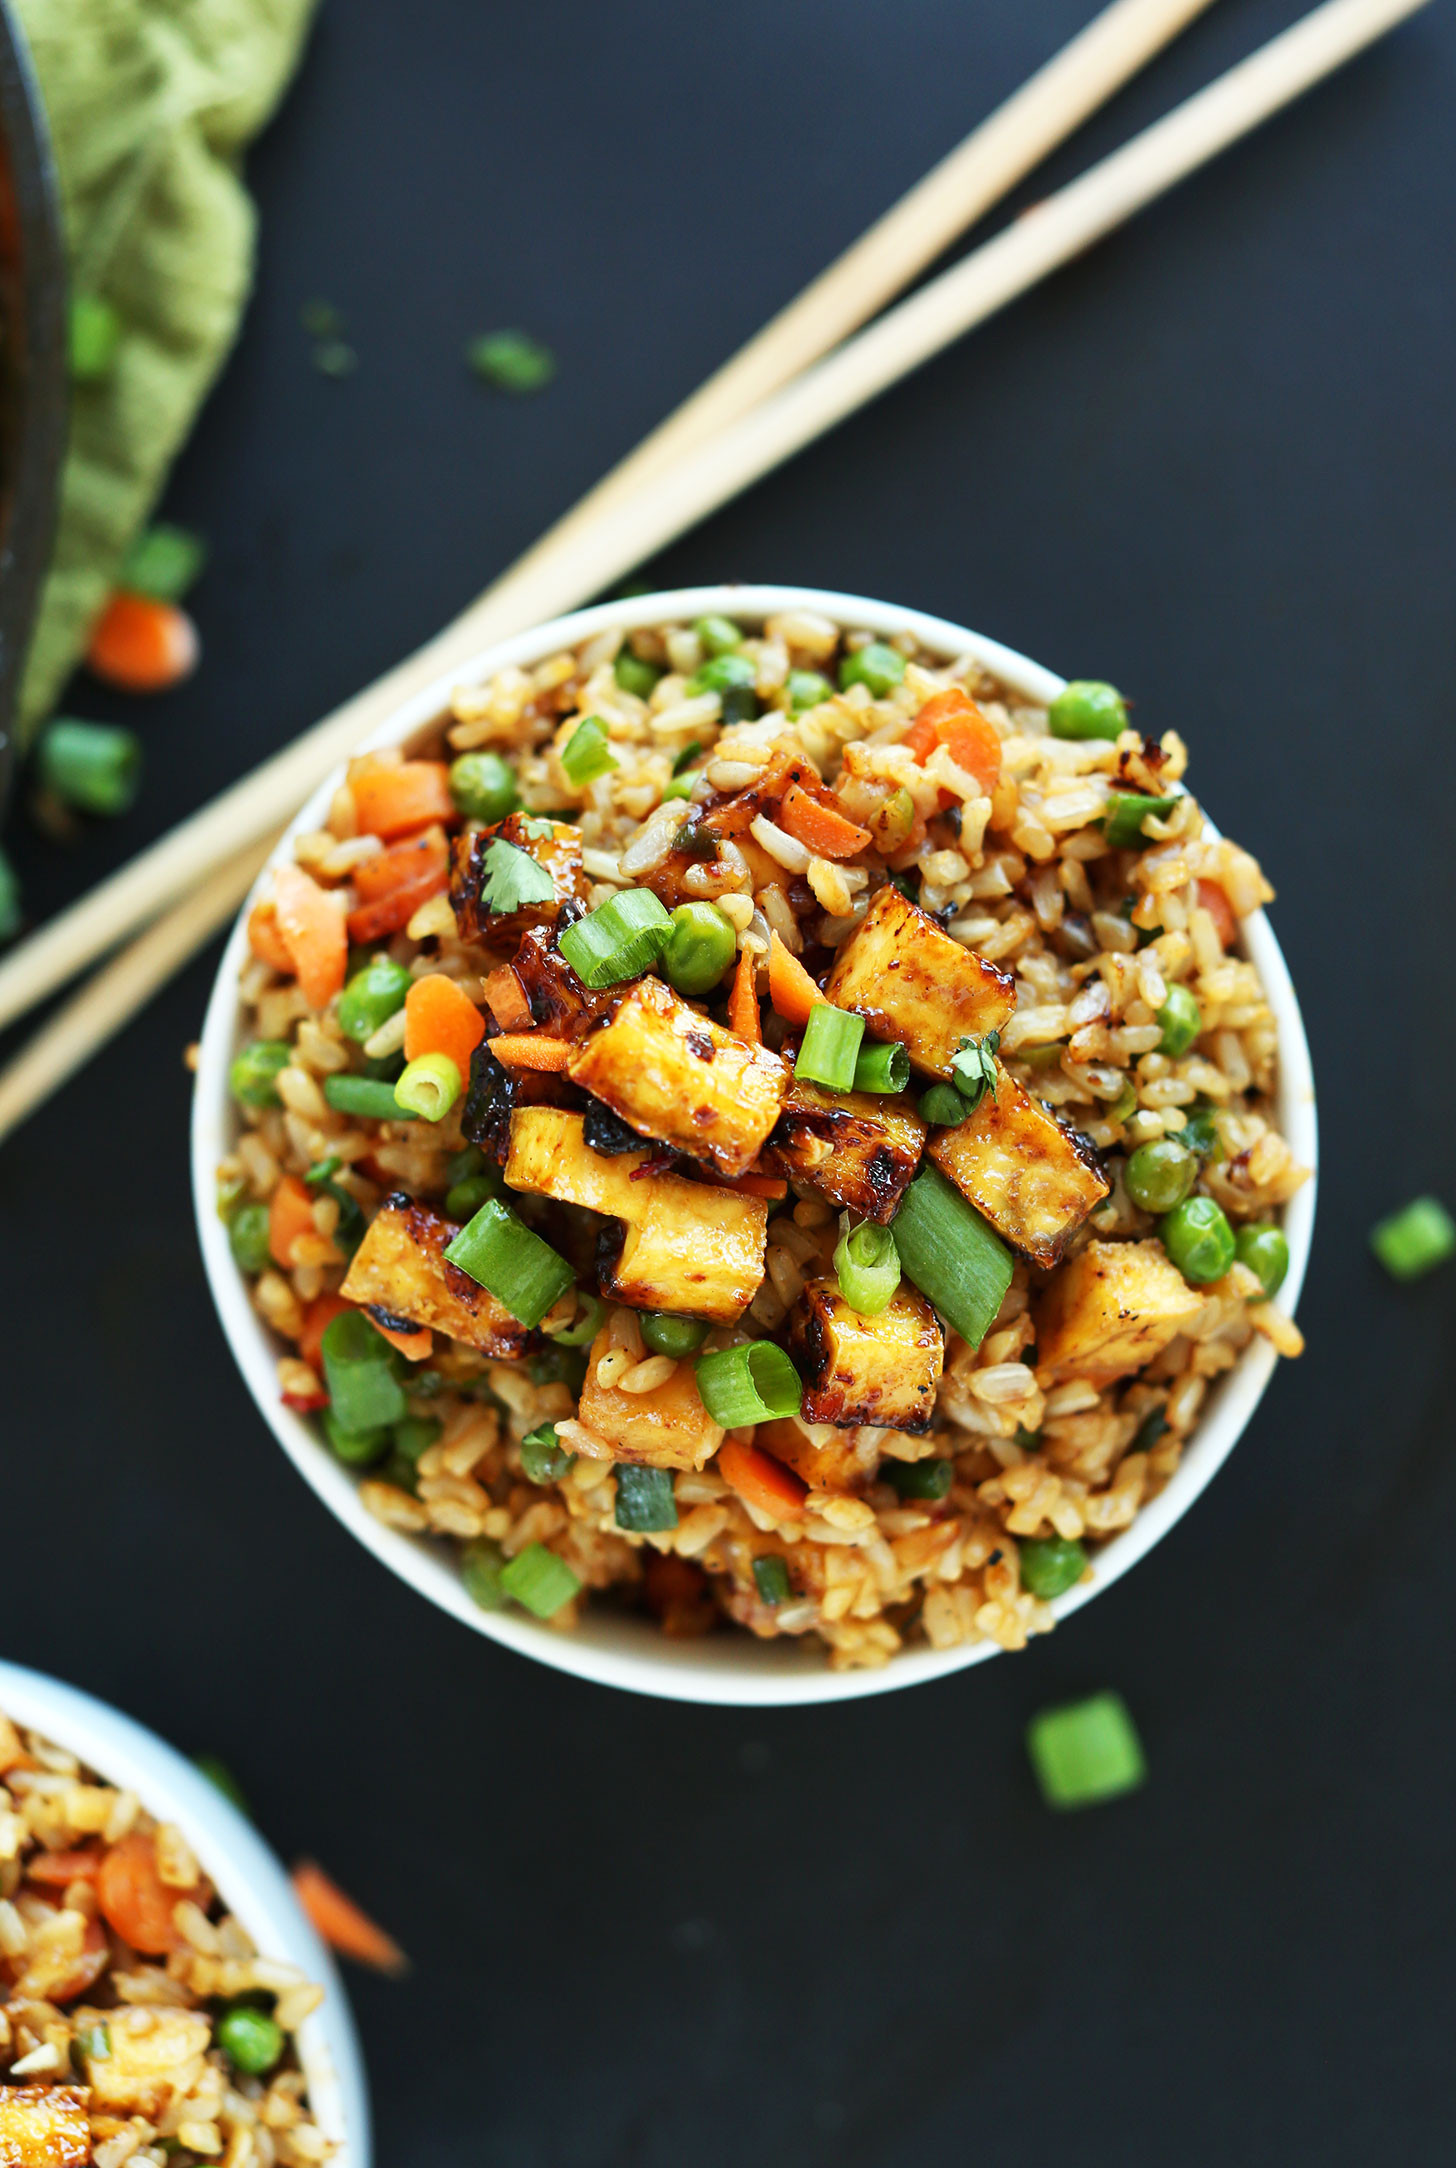 Vegetarian Recipes With Tofu
 Vegan Fried Rice